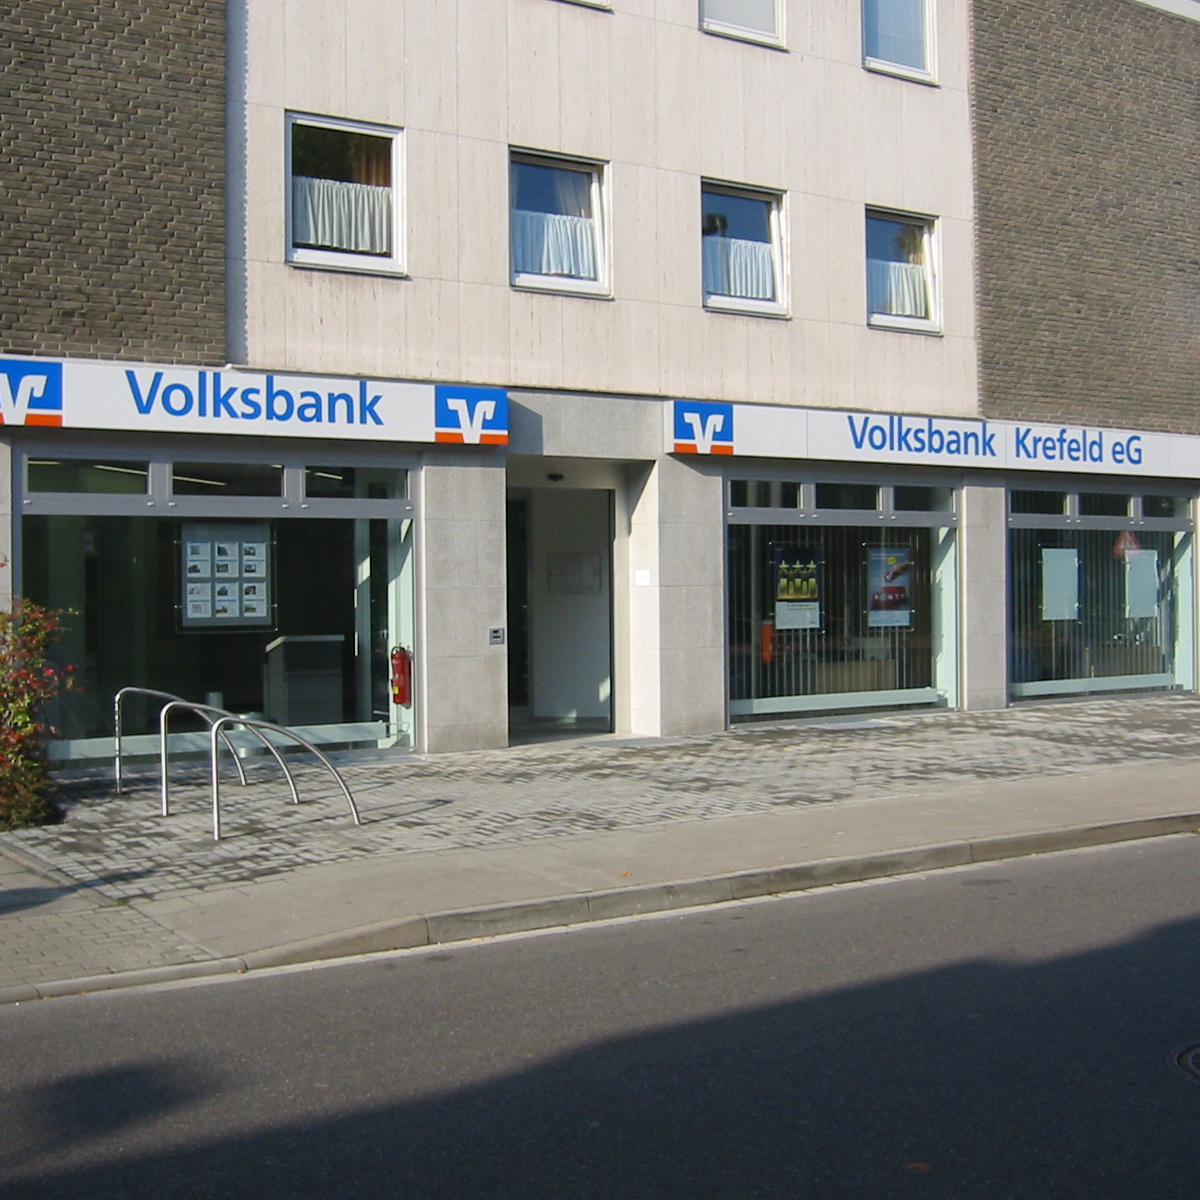 Volksbank Krefeld eG, Schulstraße 1 in Meerbusch